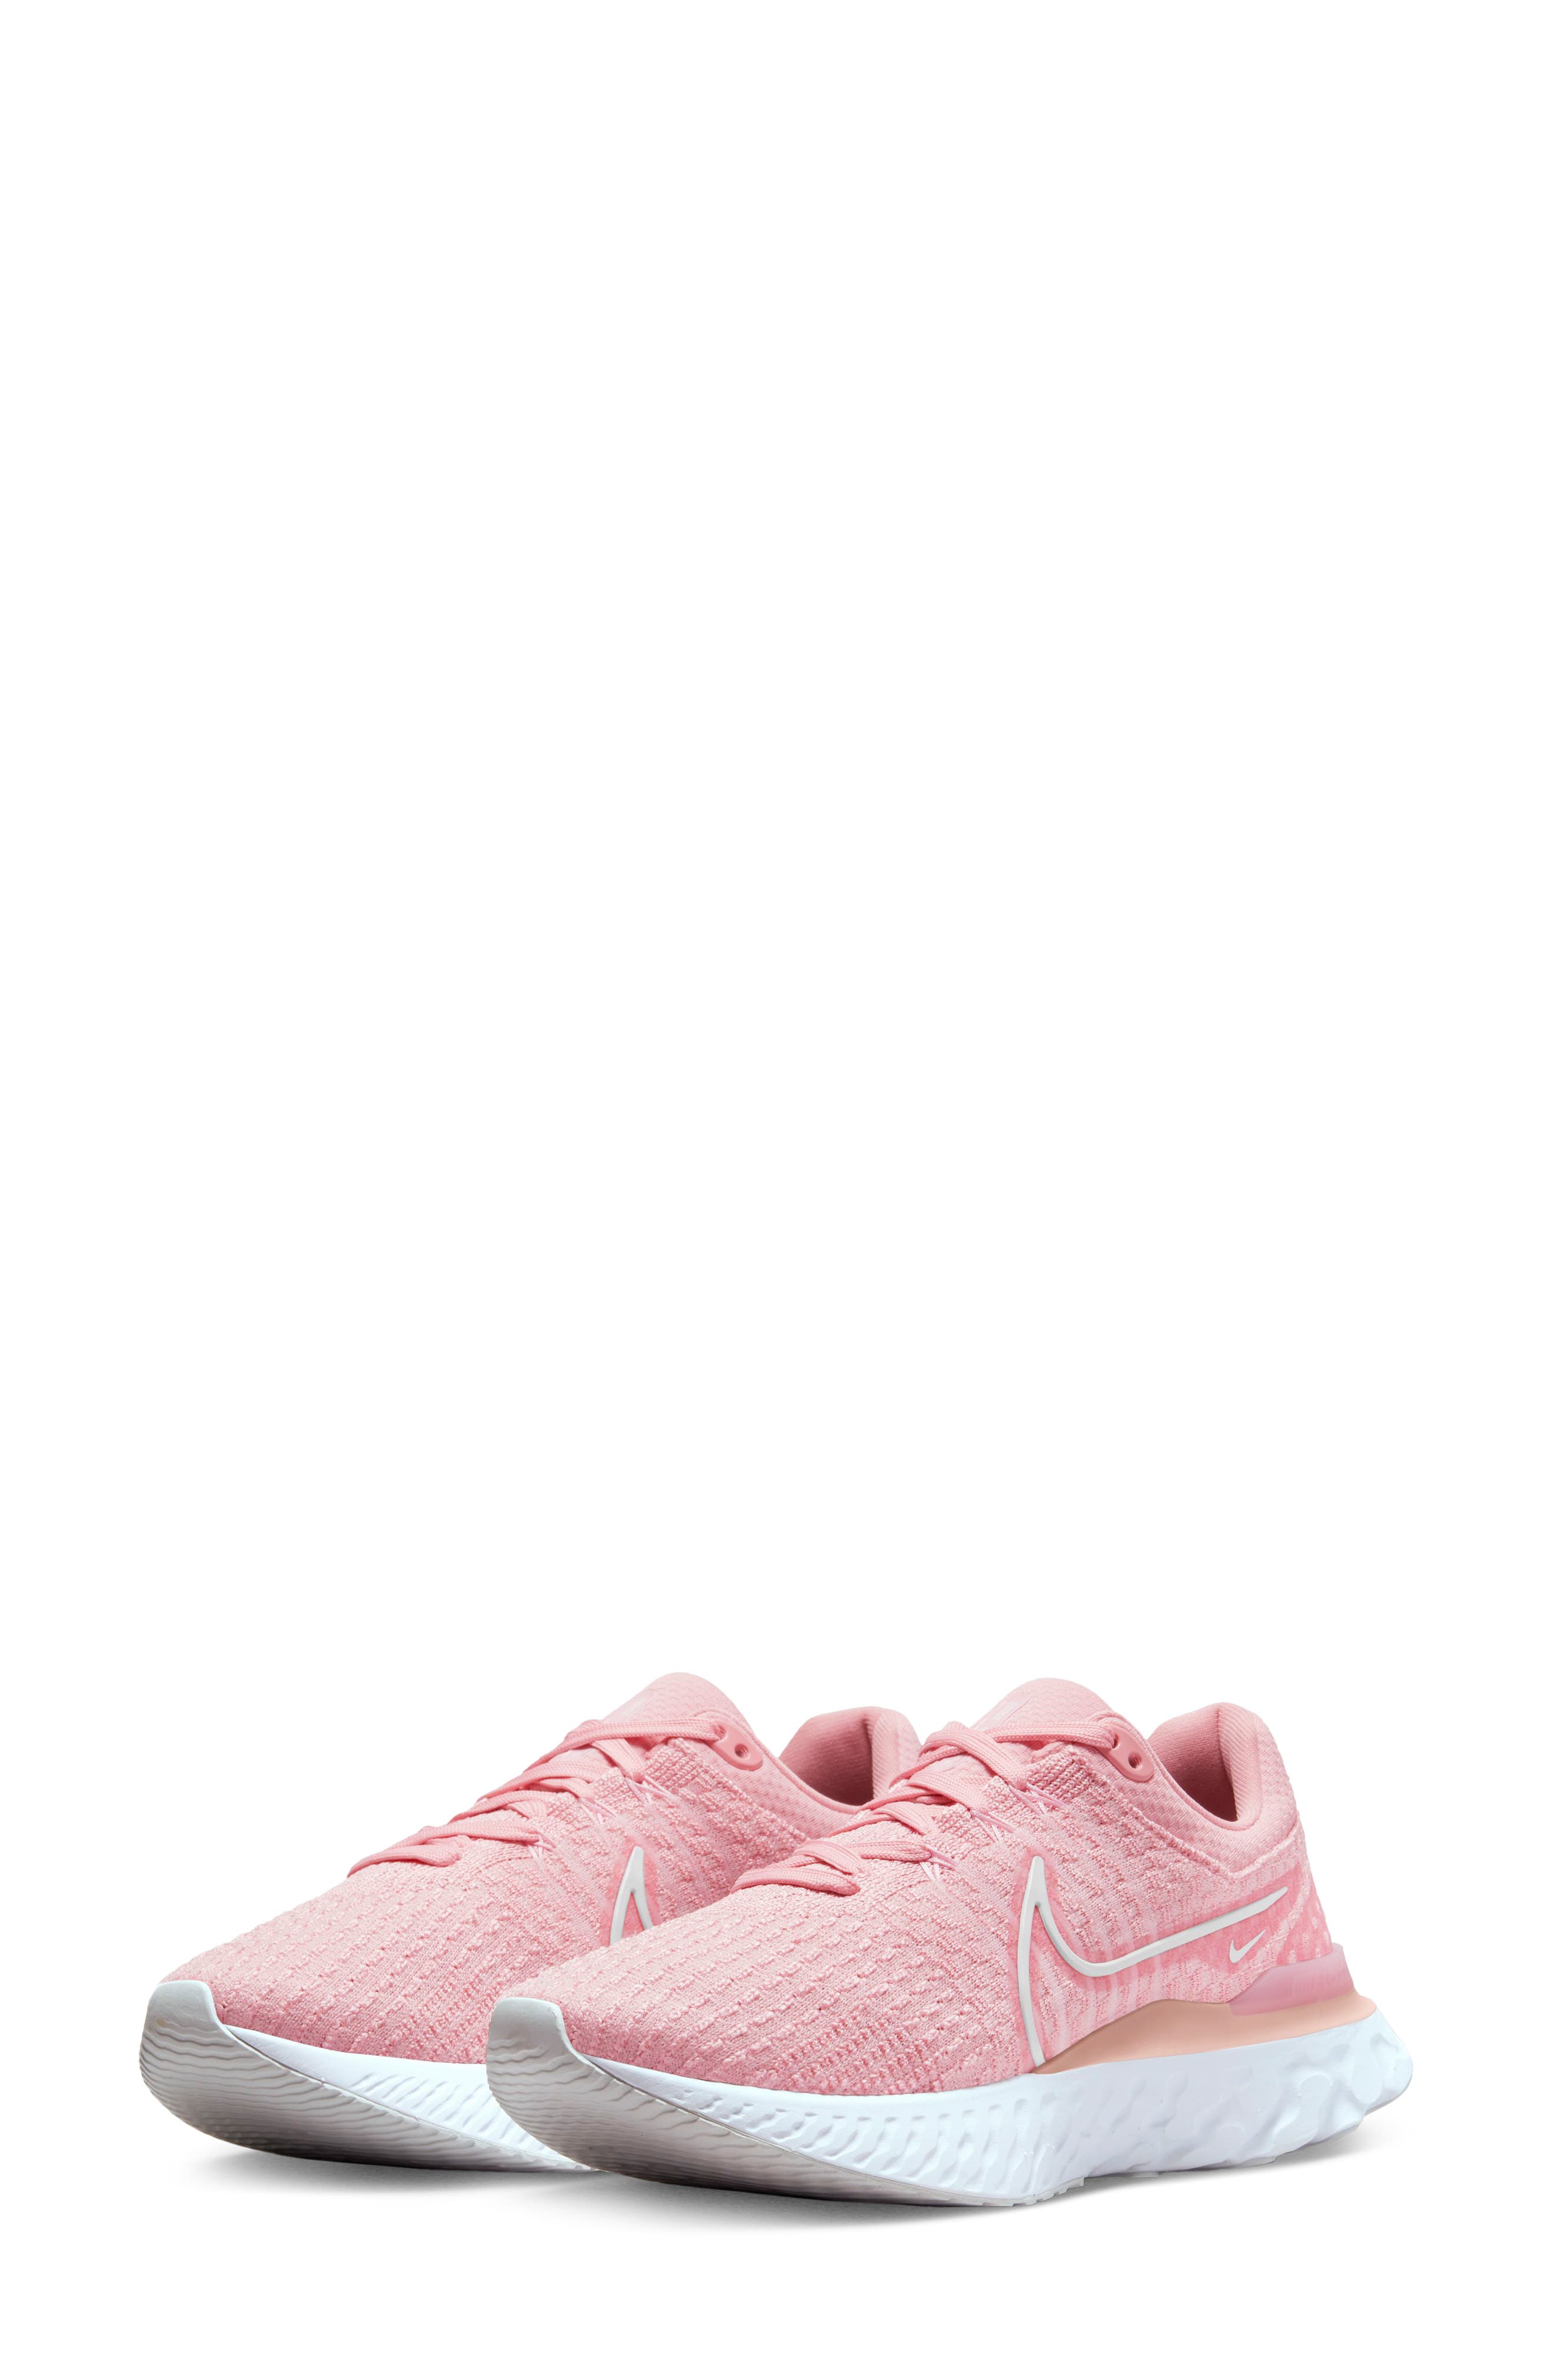 nike pink shoes running